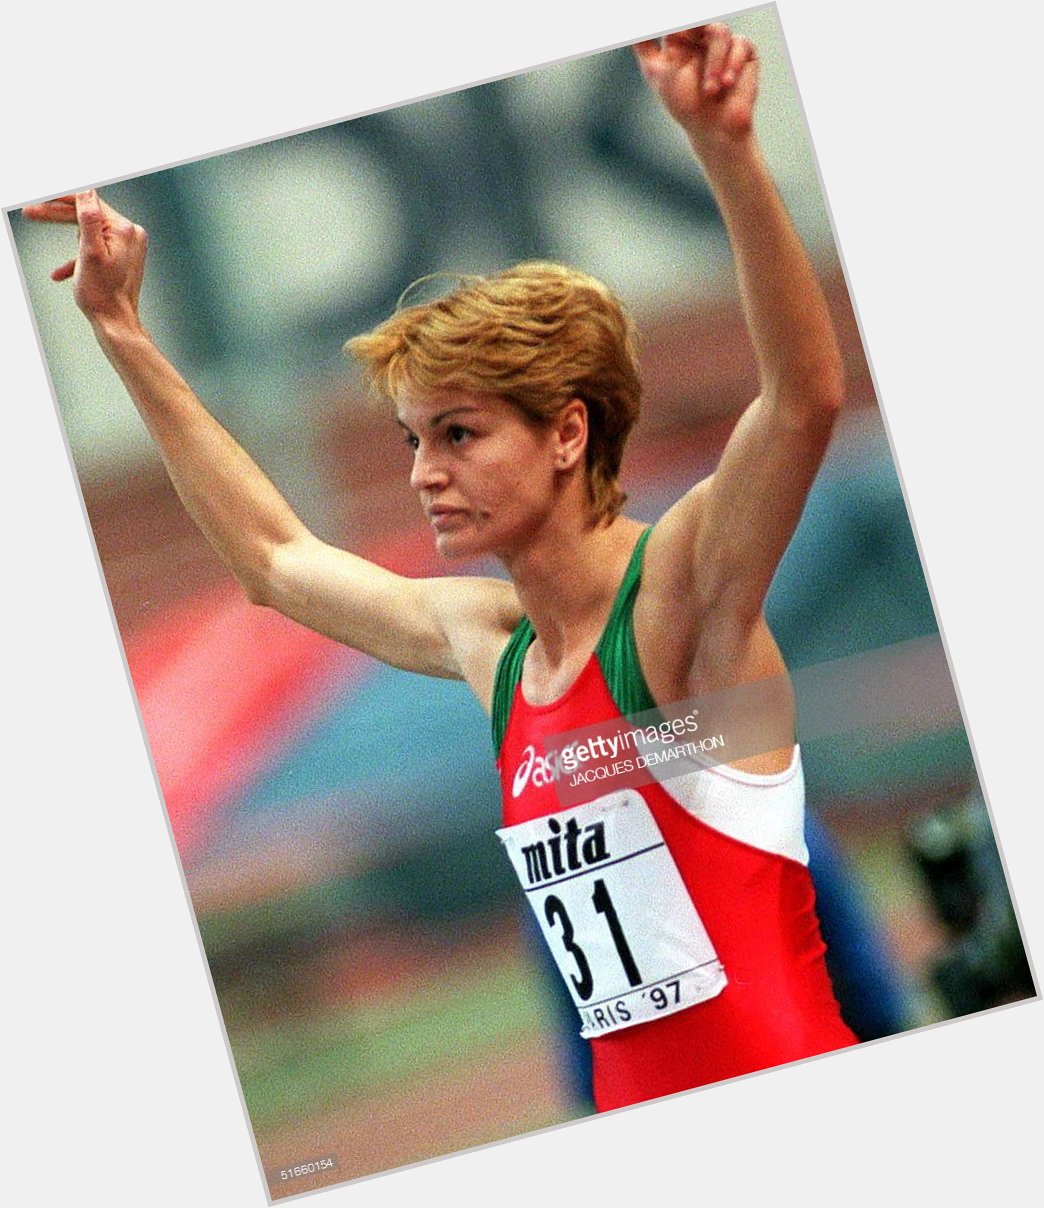 Happy birthday Stefka Kostadinova(born 25.5.1965)
Her world record of 2.09 meters has stood since 1987! 